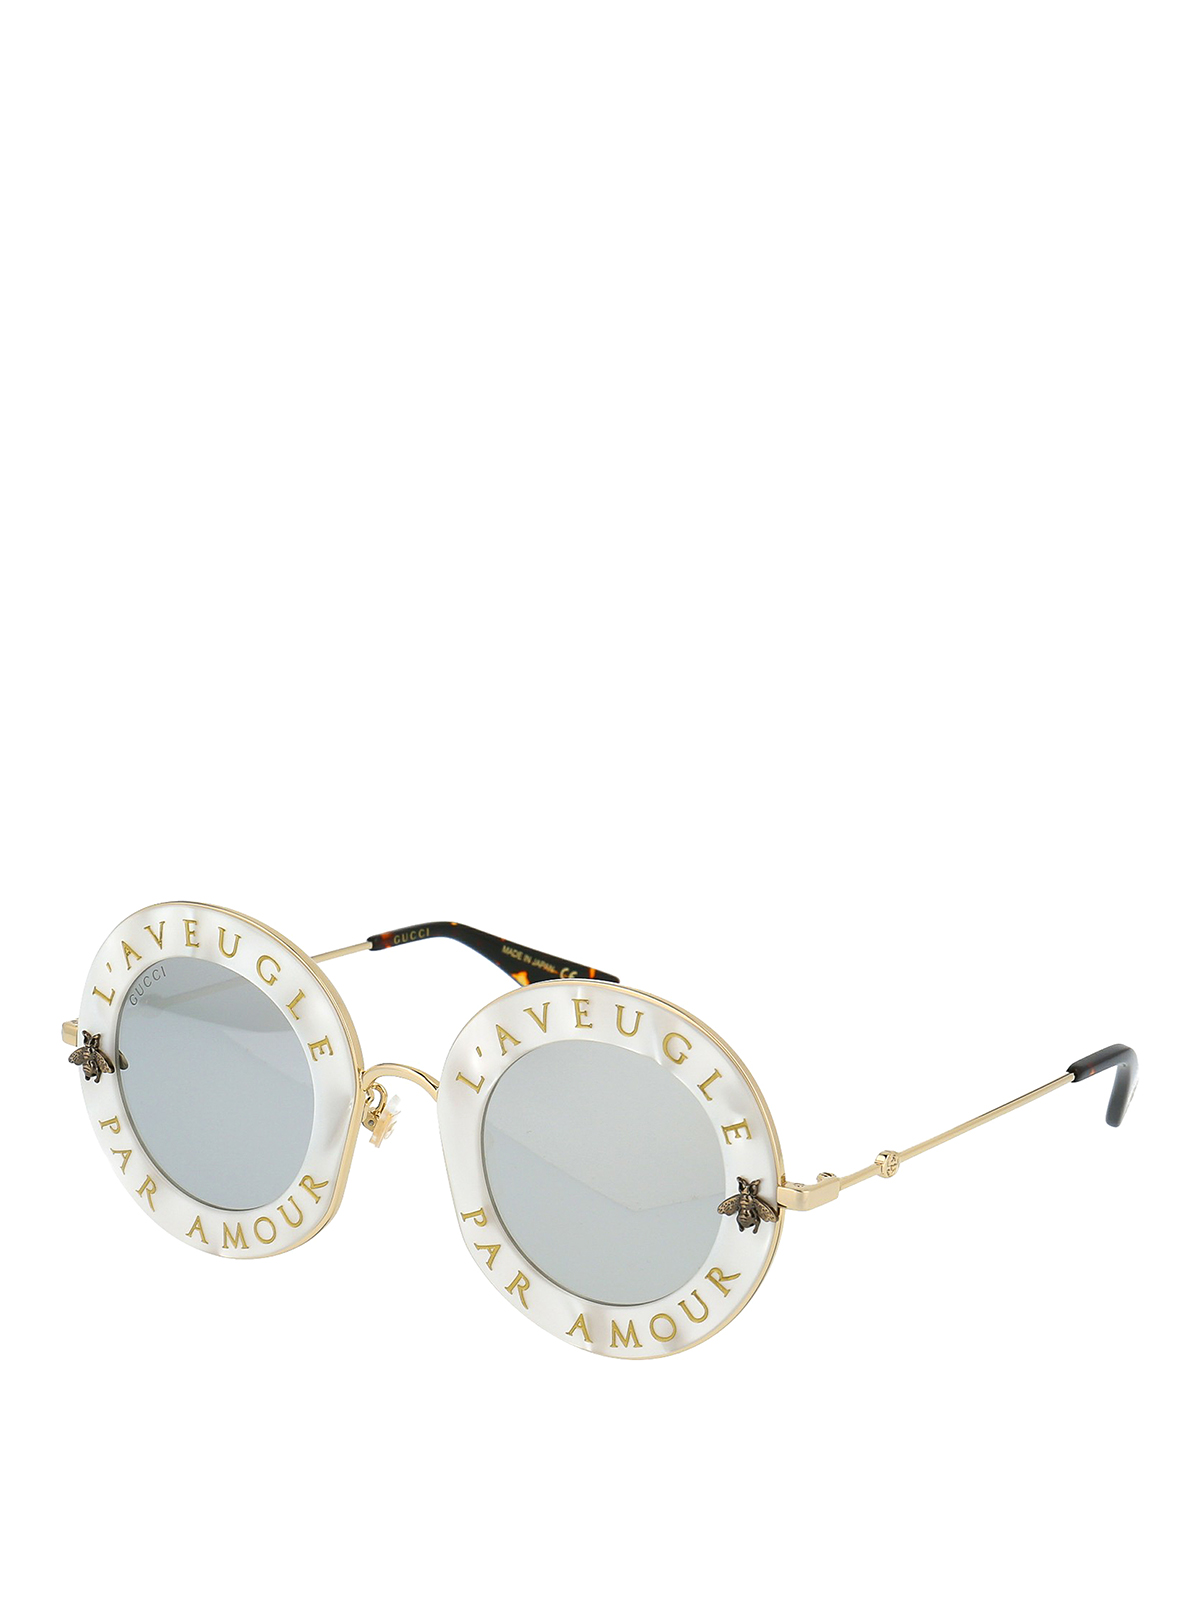 Gucci - Par Amour sunglasses - GG0113S003 | iKRIX.com